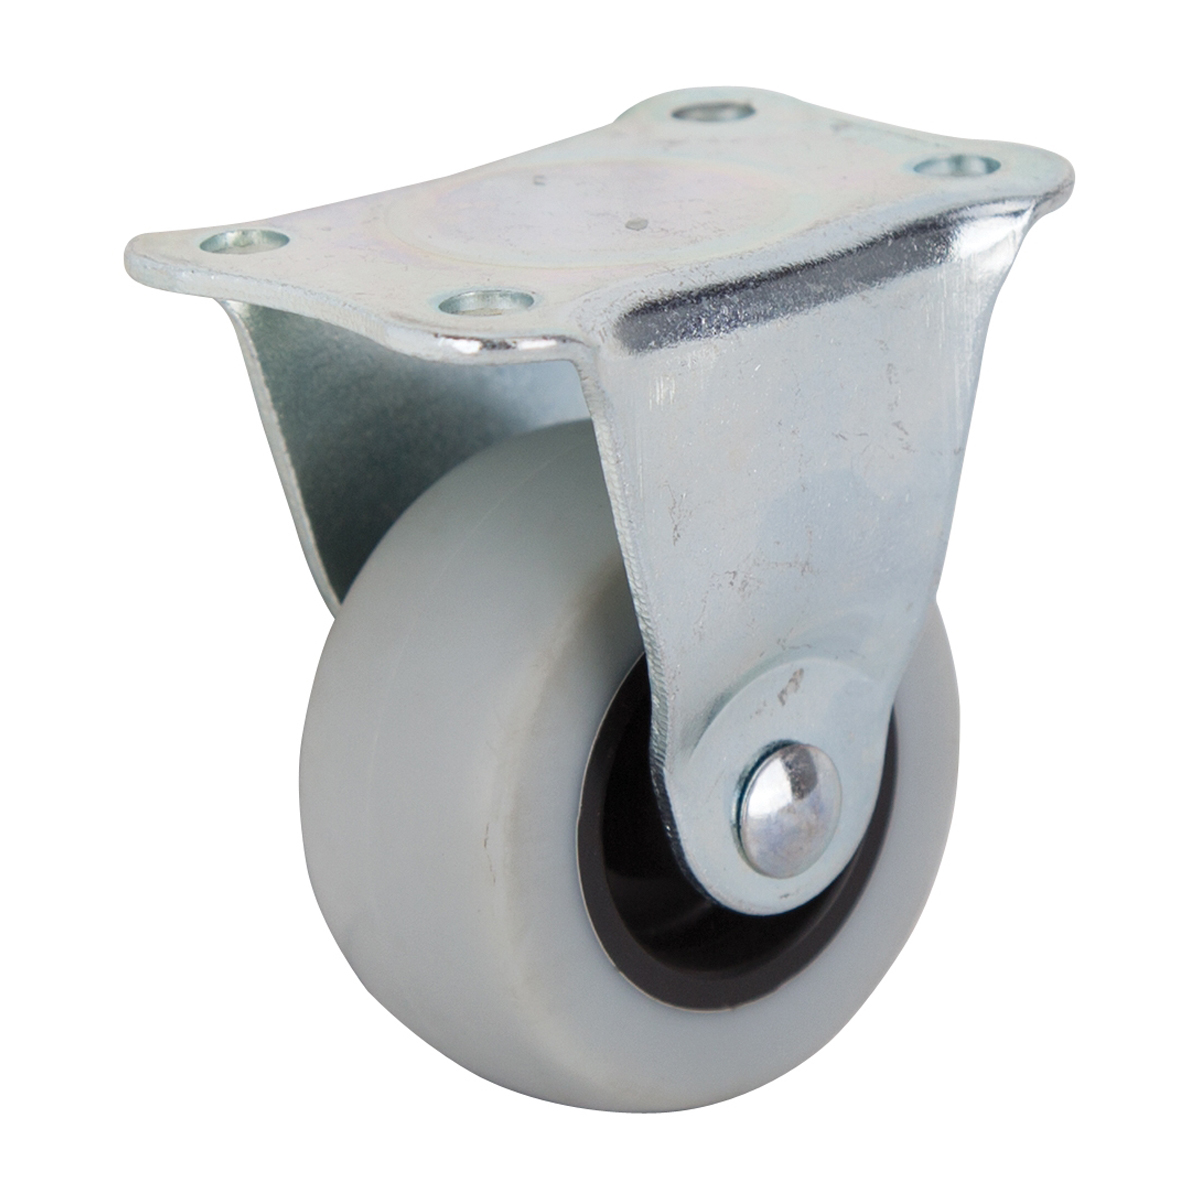 JC-N01-G Rigid Caster, 2 in Dia Wheel, 23 mm W Wheel, Thermoplastic Rubber Wheel, Gray, 105 lb